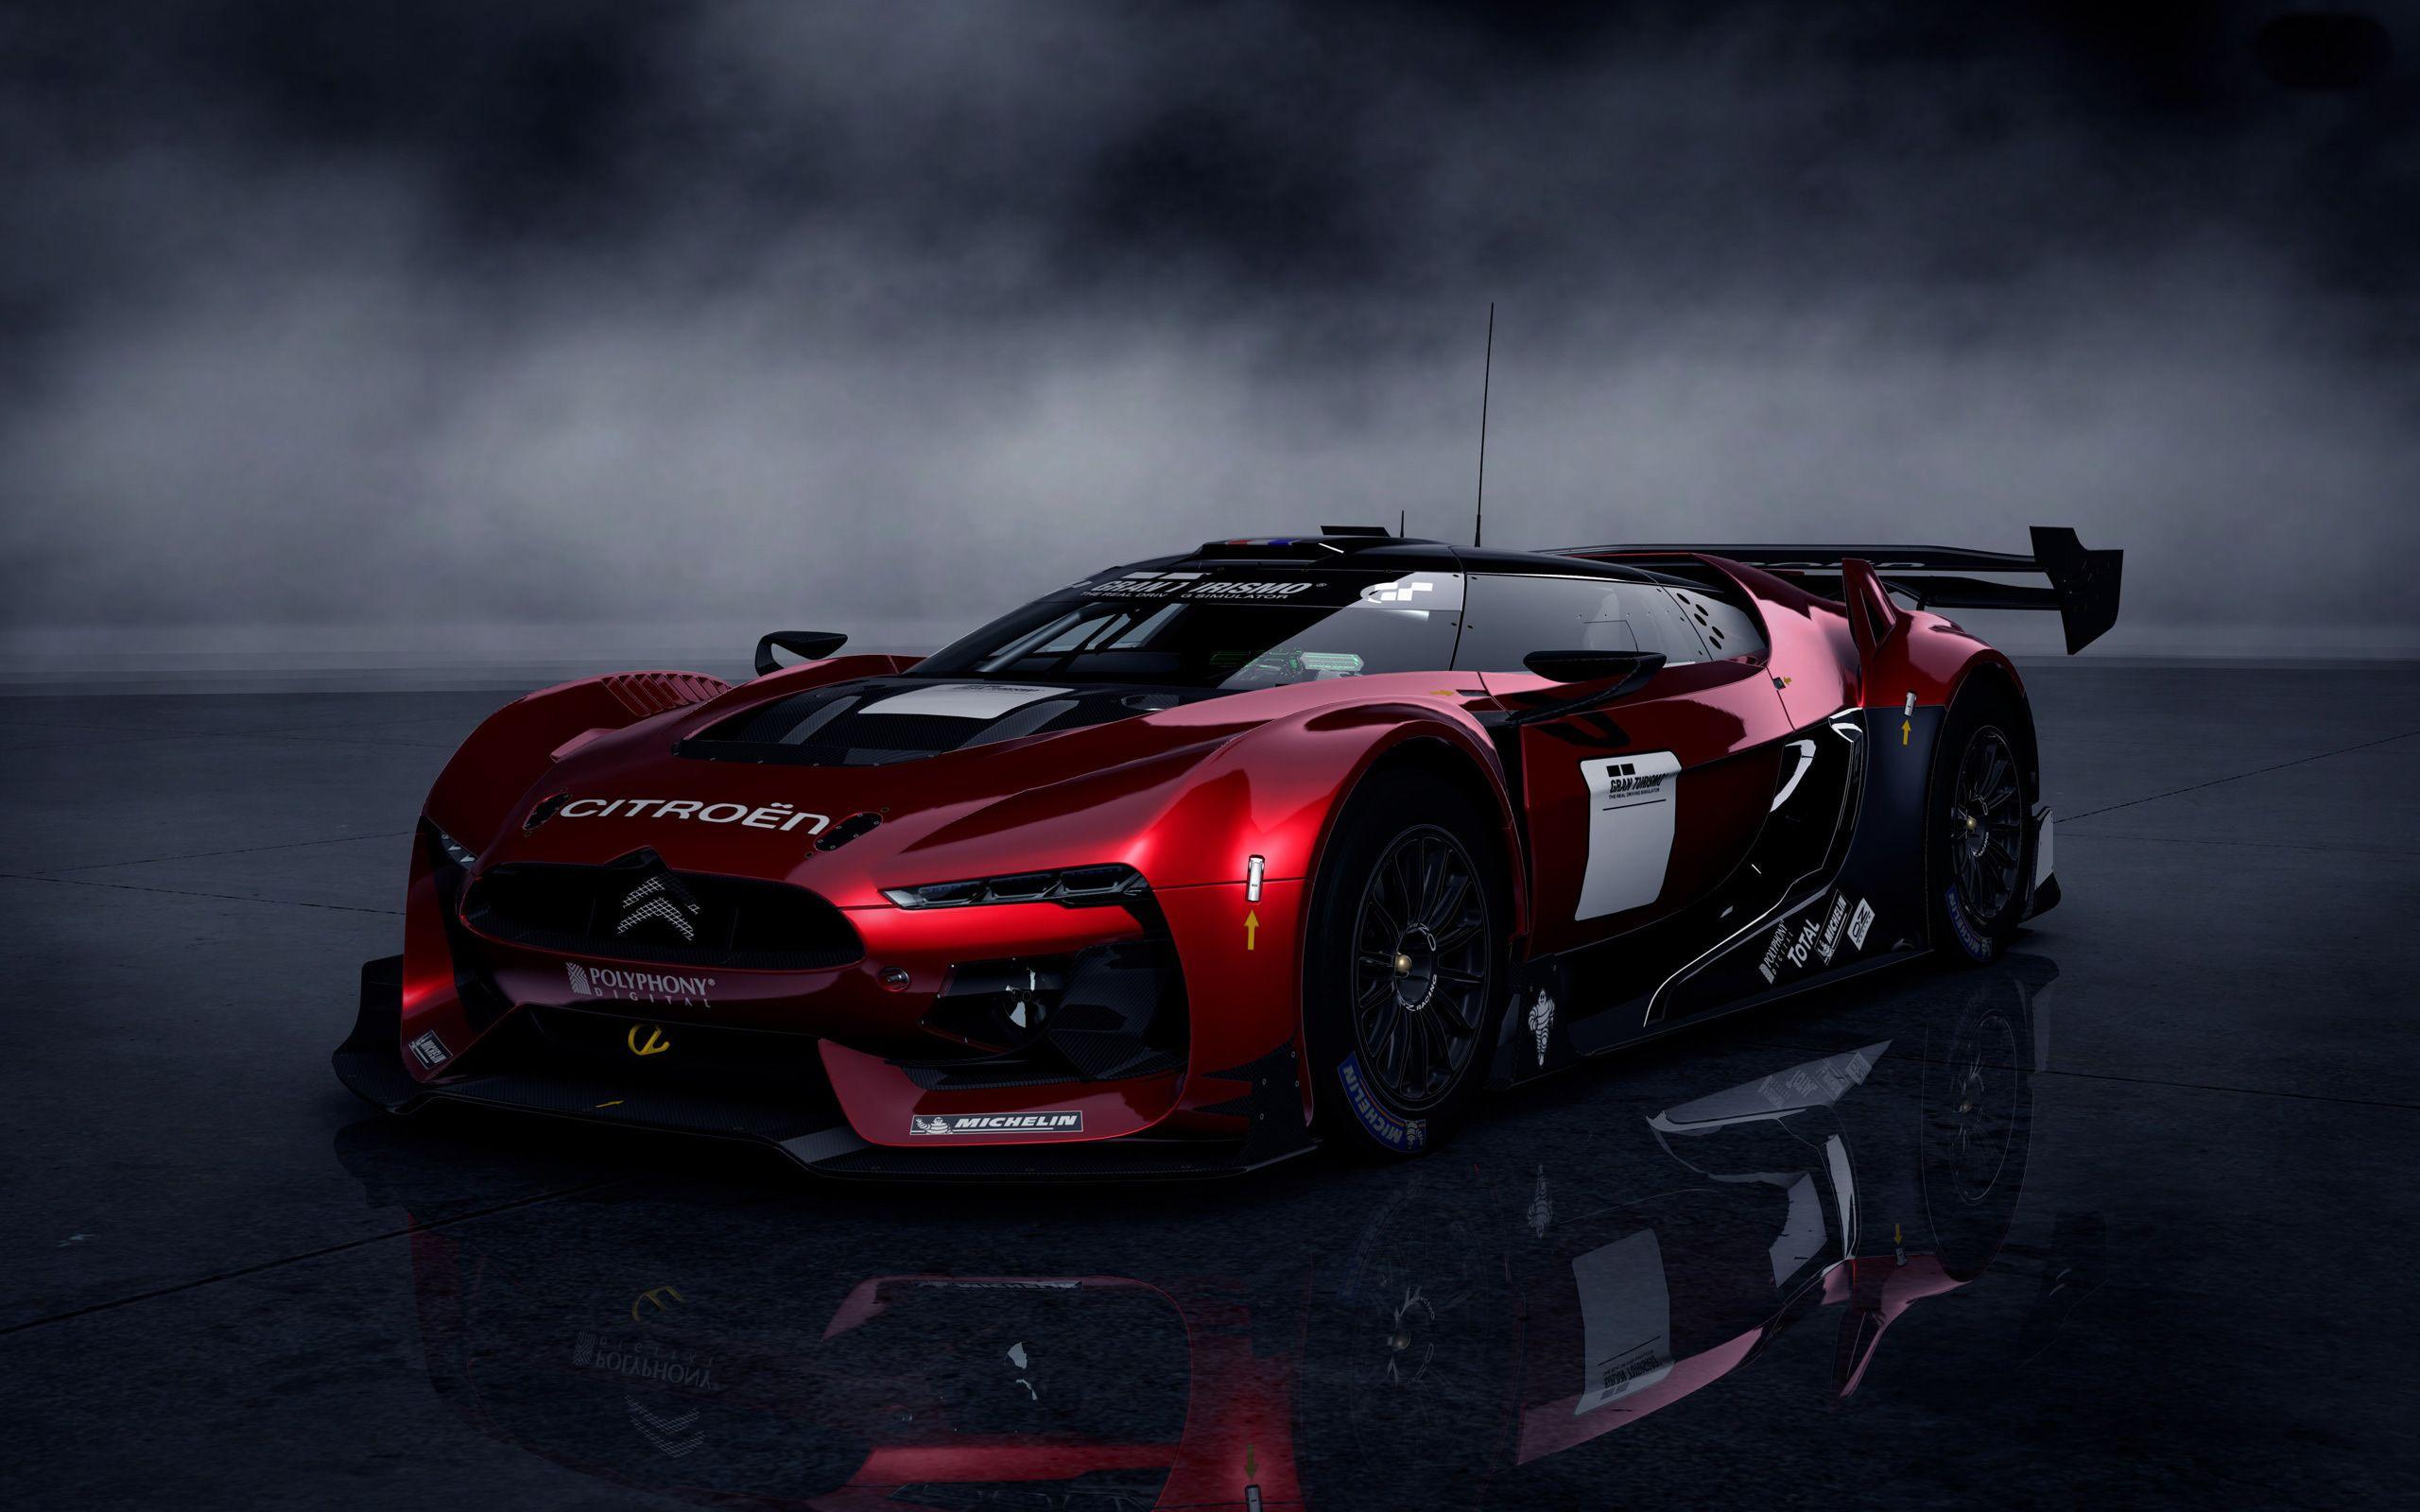 Coolest Cars In The World Desktop Wallpaper. I HD Image